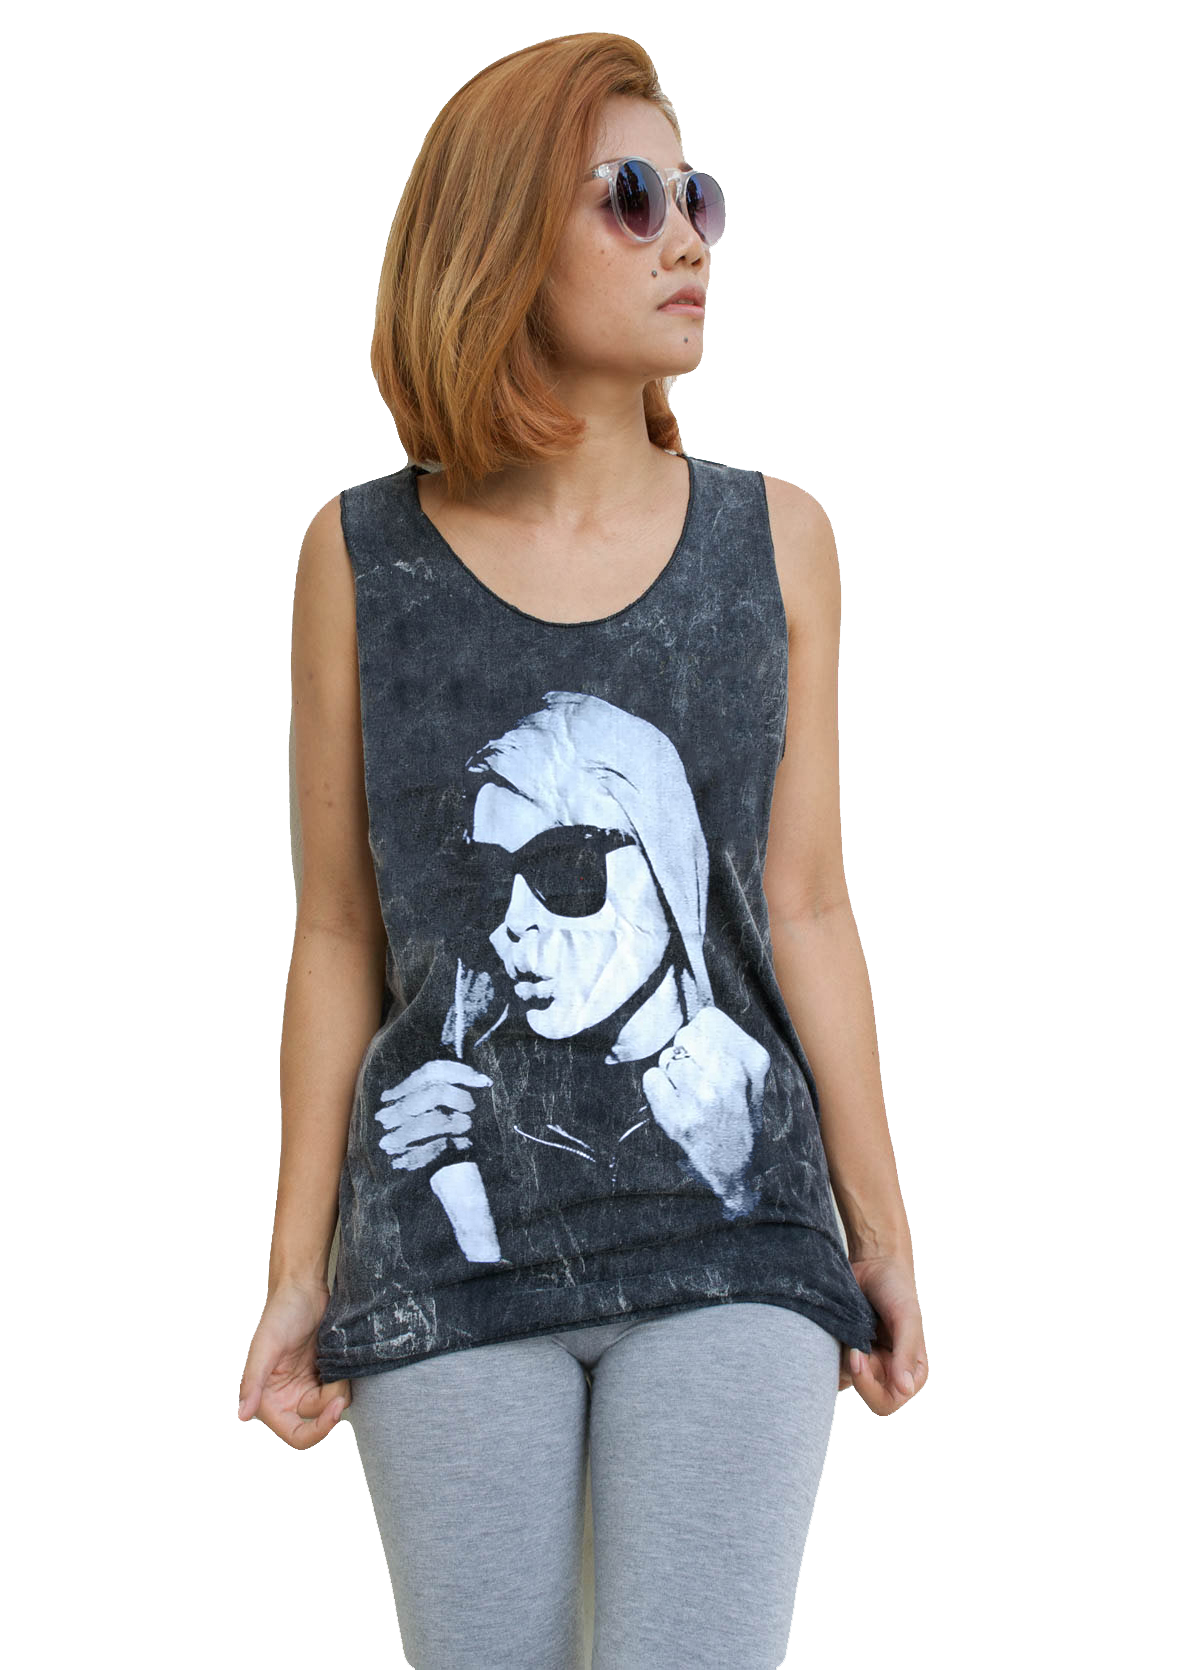 Unisex Blondie Debbie Harry Tank-Top Singlet vest Sleeveless T-shirt